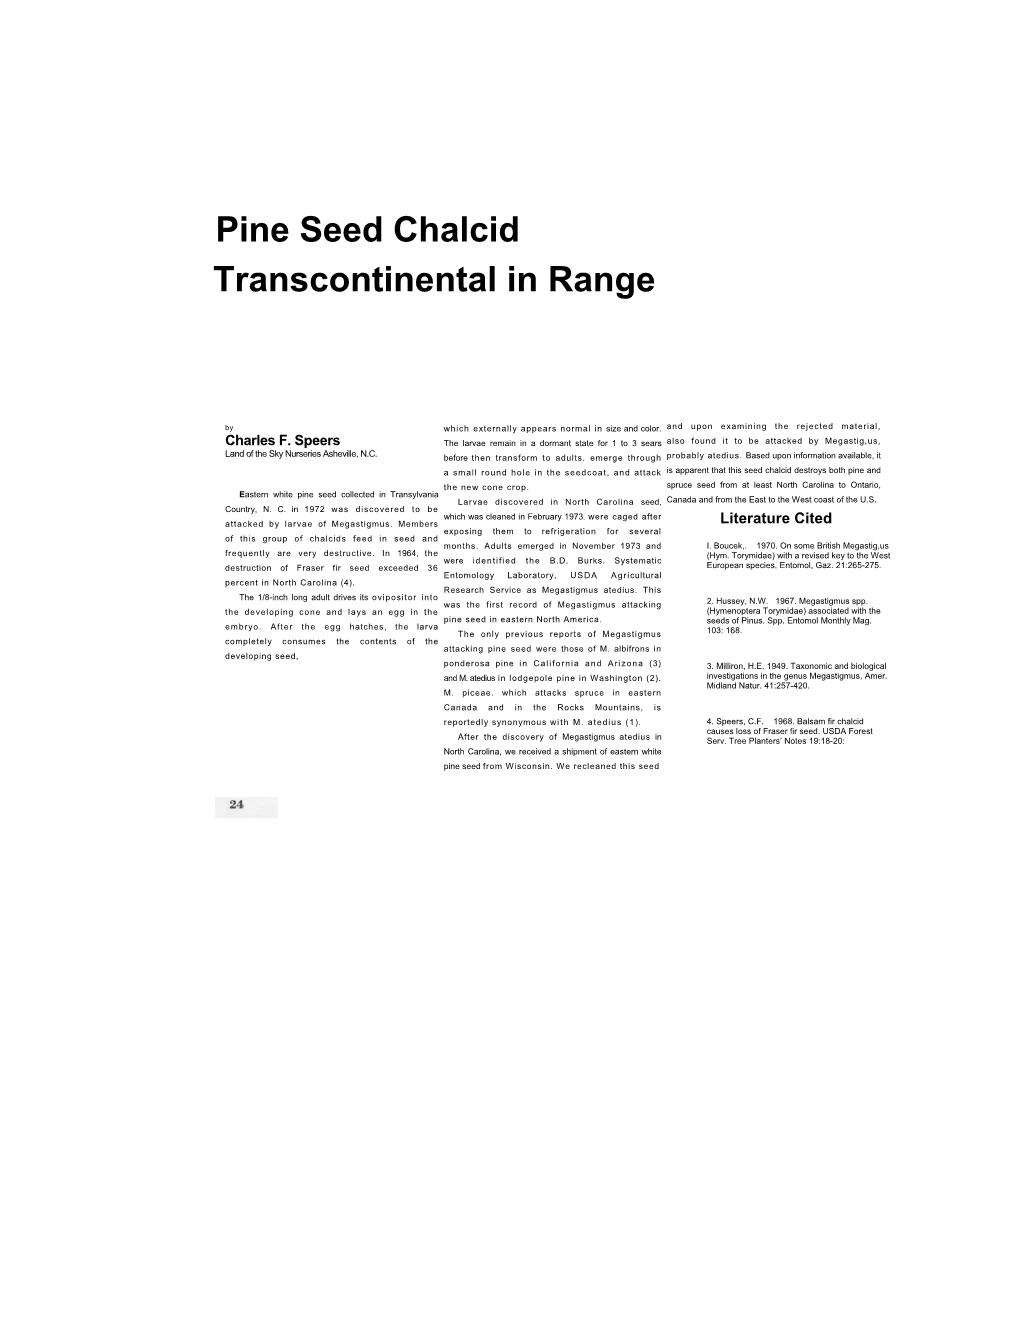 Pine Seed Chalcid Transcontinental in Range